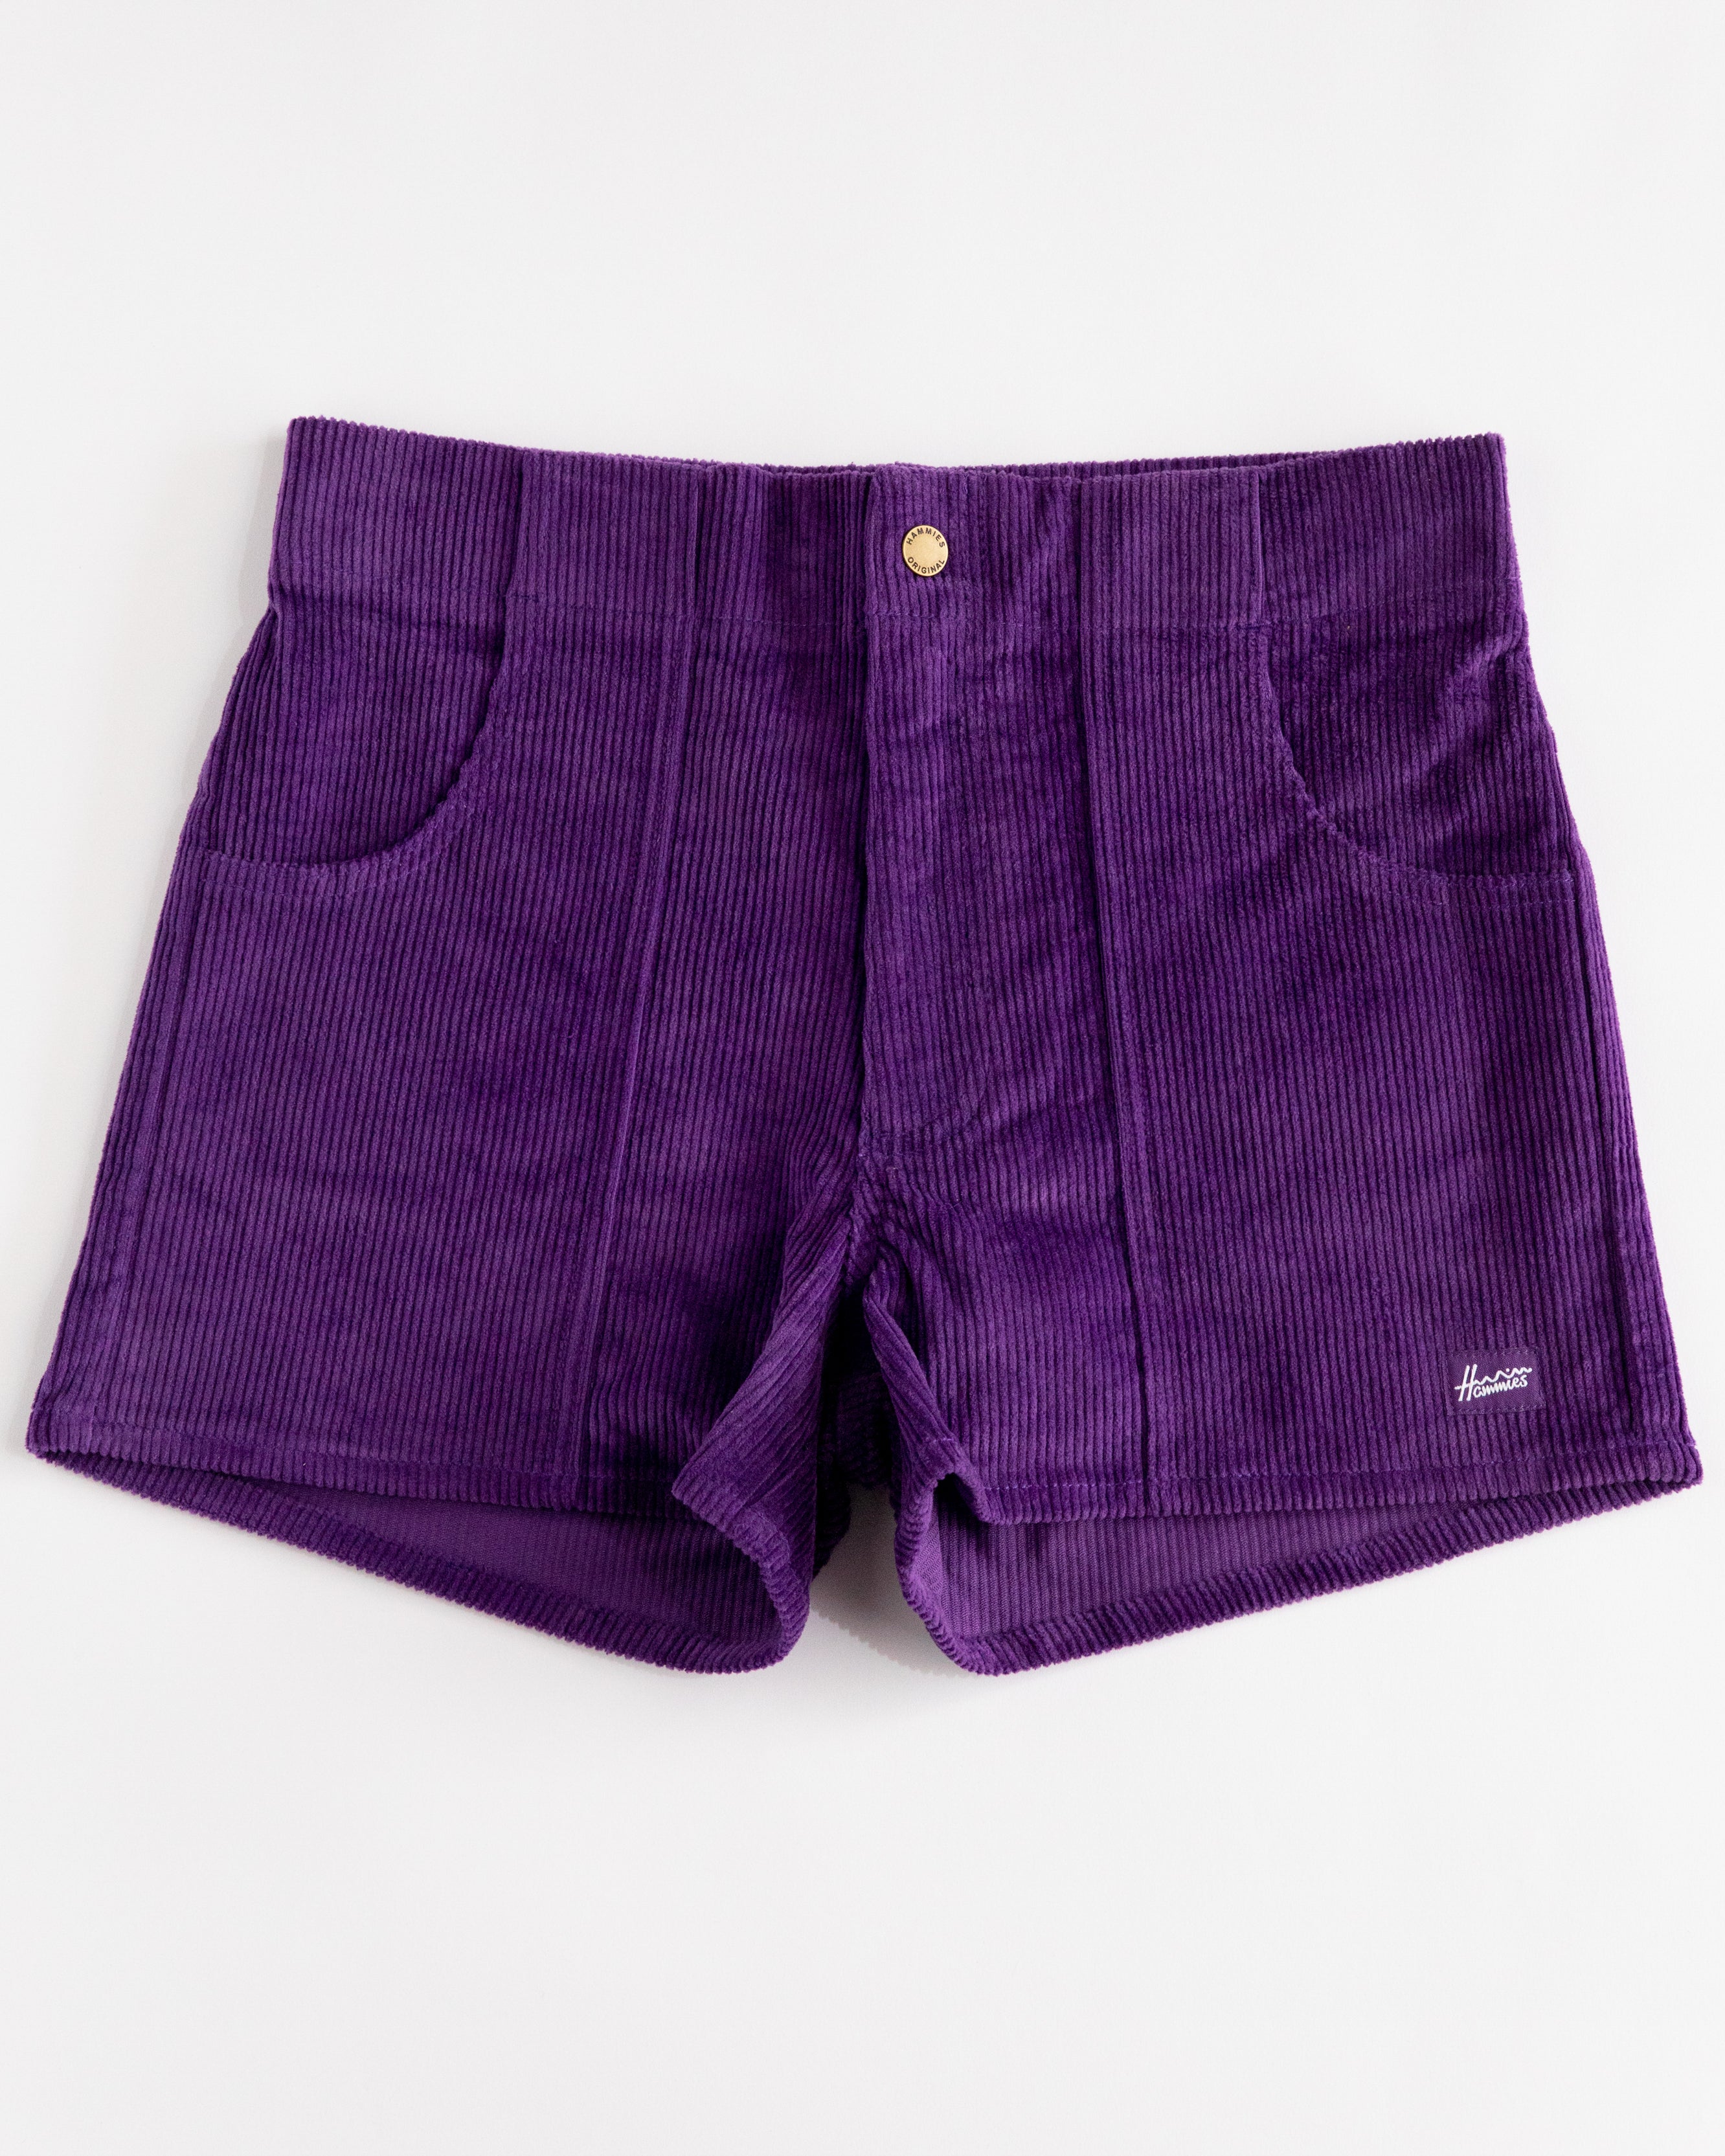 Hammies Men's Retro Corduroy Shorts 32 / Plum